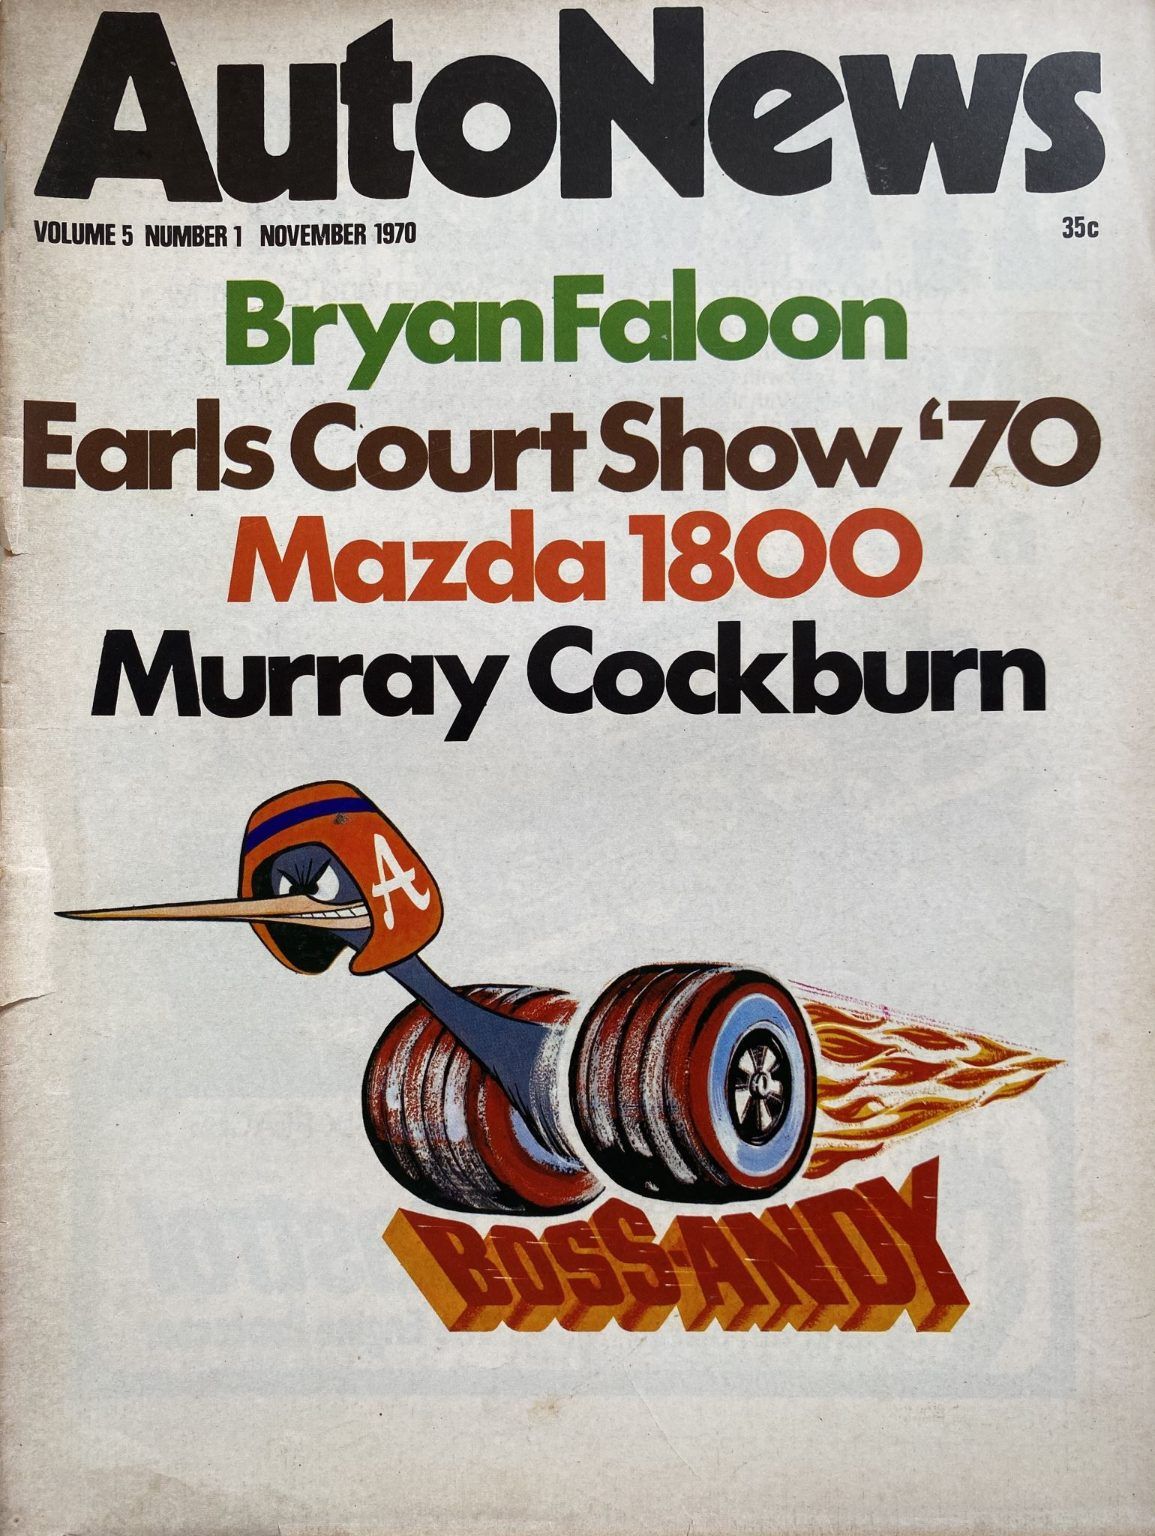 OLD MAGAZINE: Auto News - Vol. 5, Number 1, November 1970